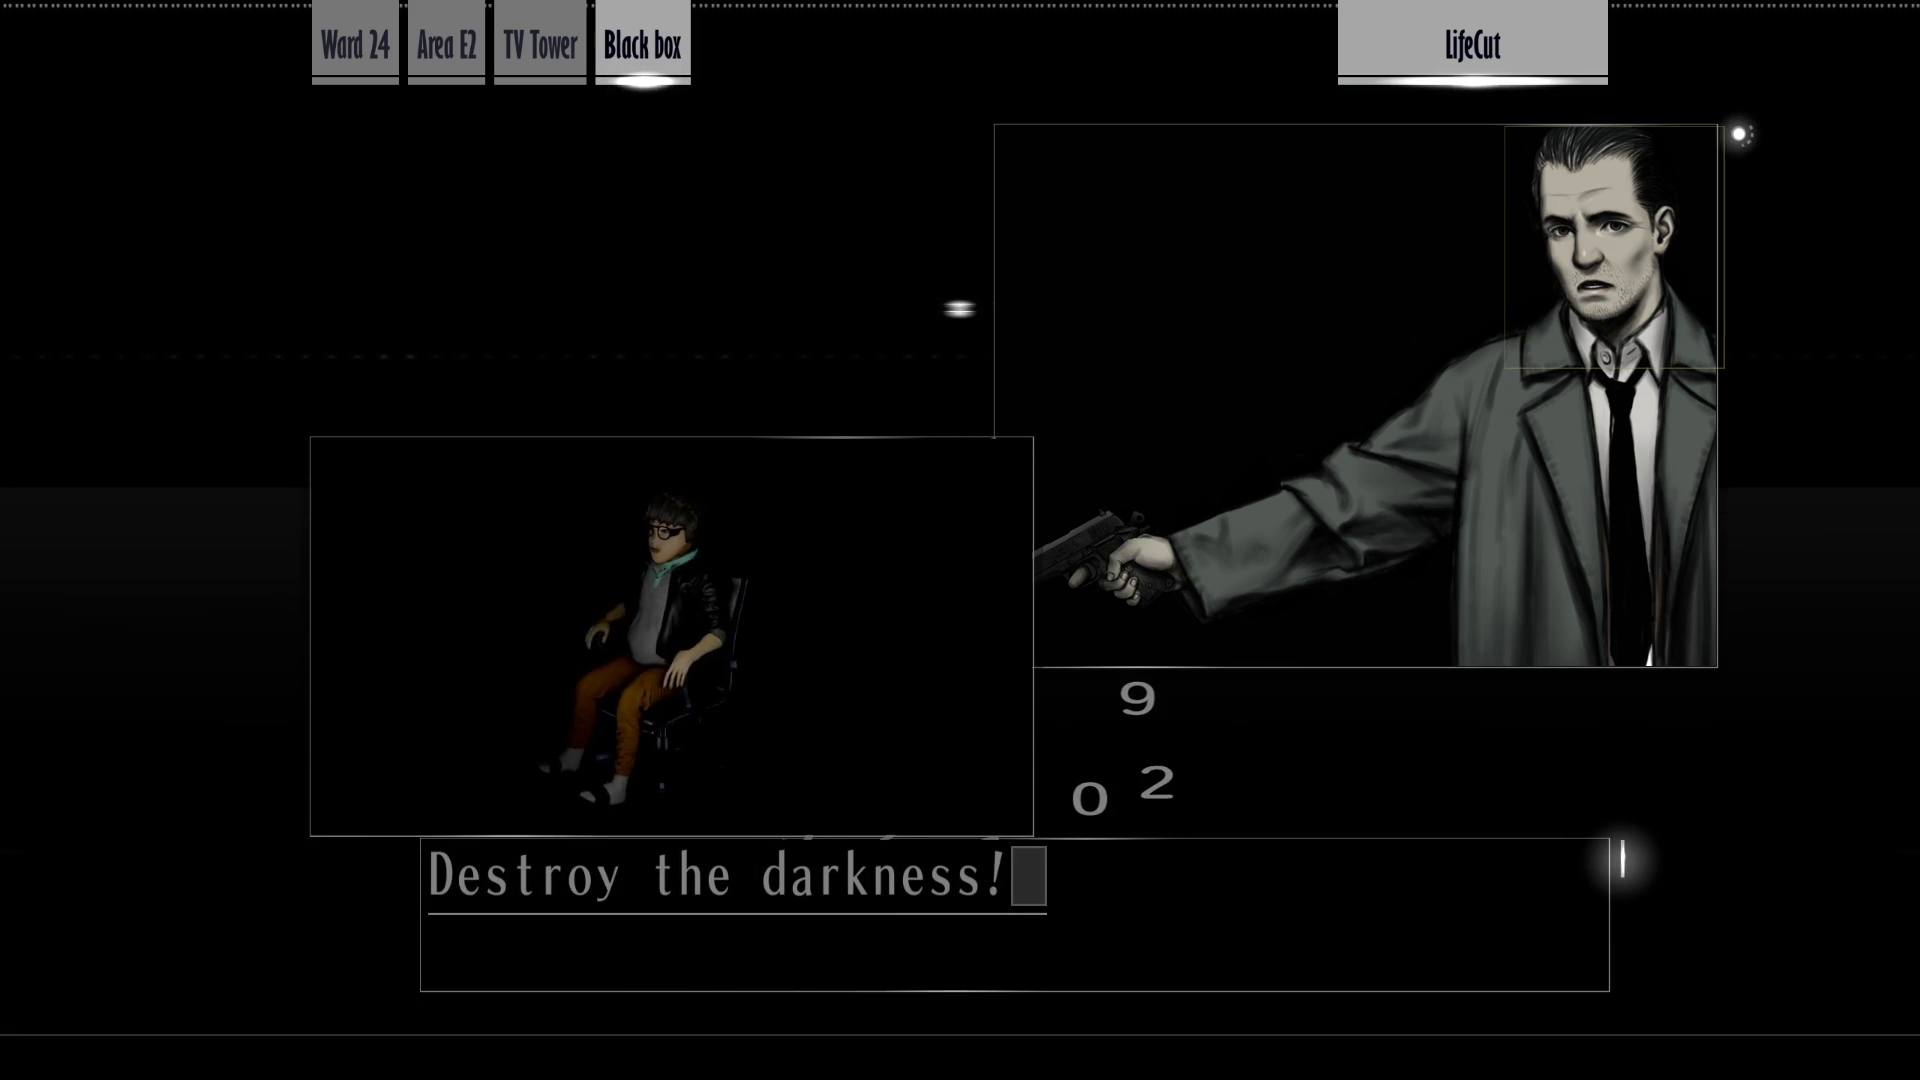 Screenshot from "LifeCut." Kusabi aims his gun at Nezu. He says to Akira, "Destroy the darkness!"